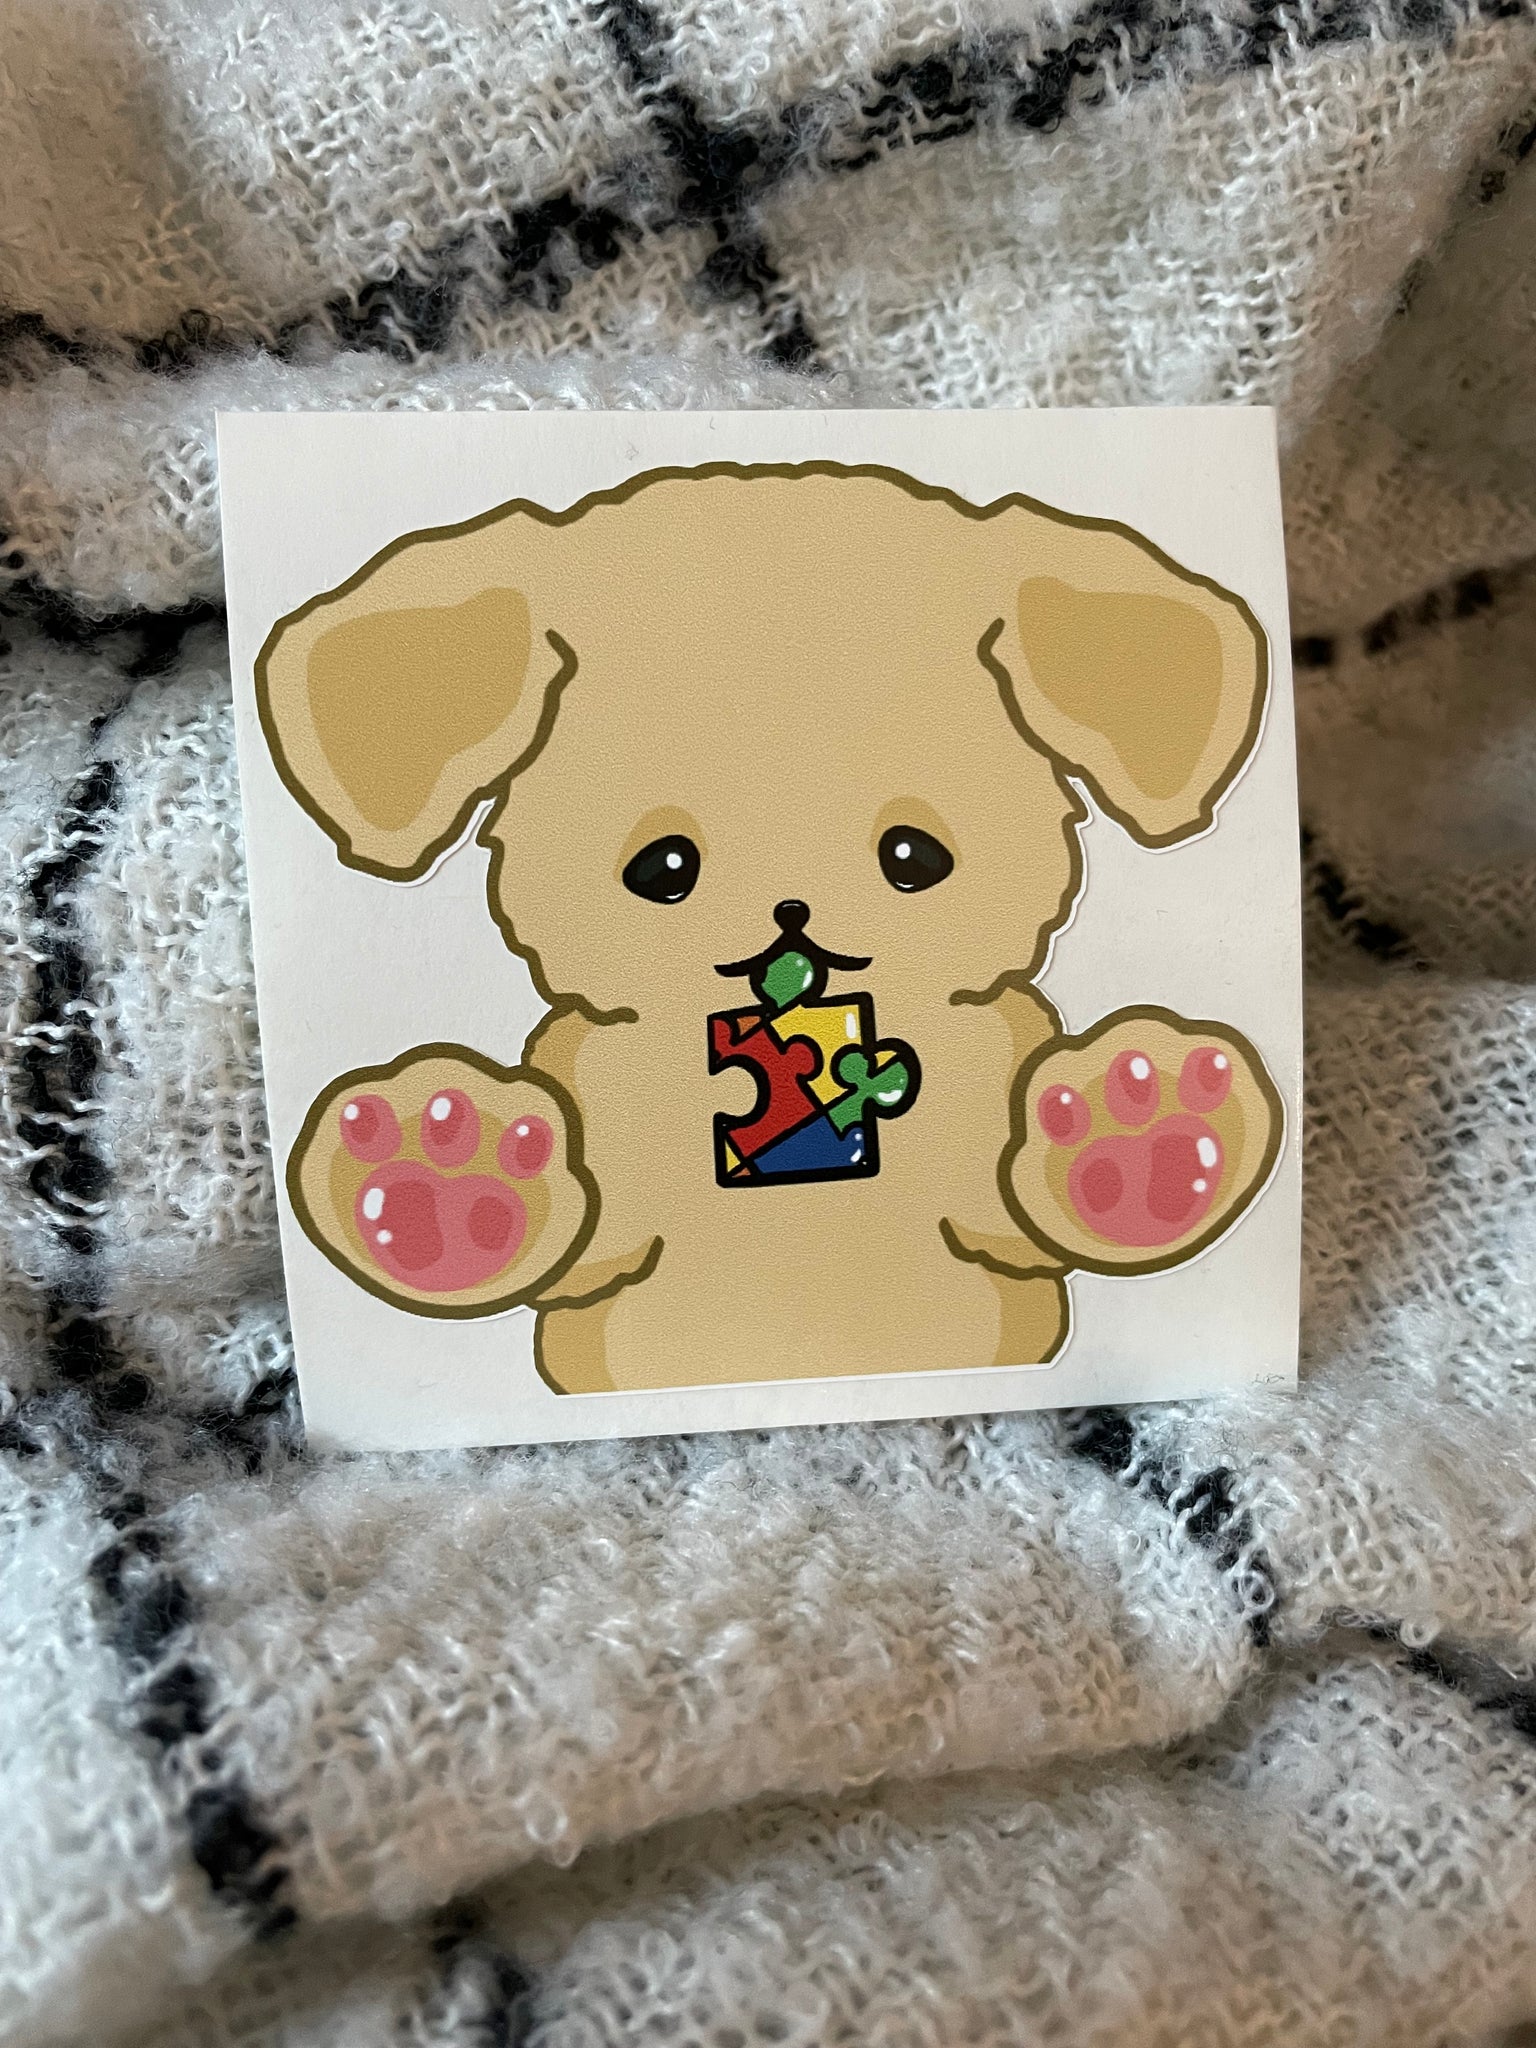 Cute Kawaii Animal Peeker Stickers for Car Bumpers, Laptops